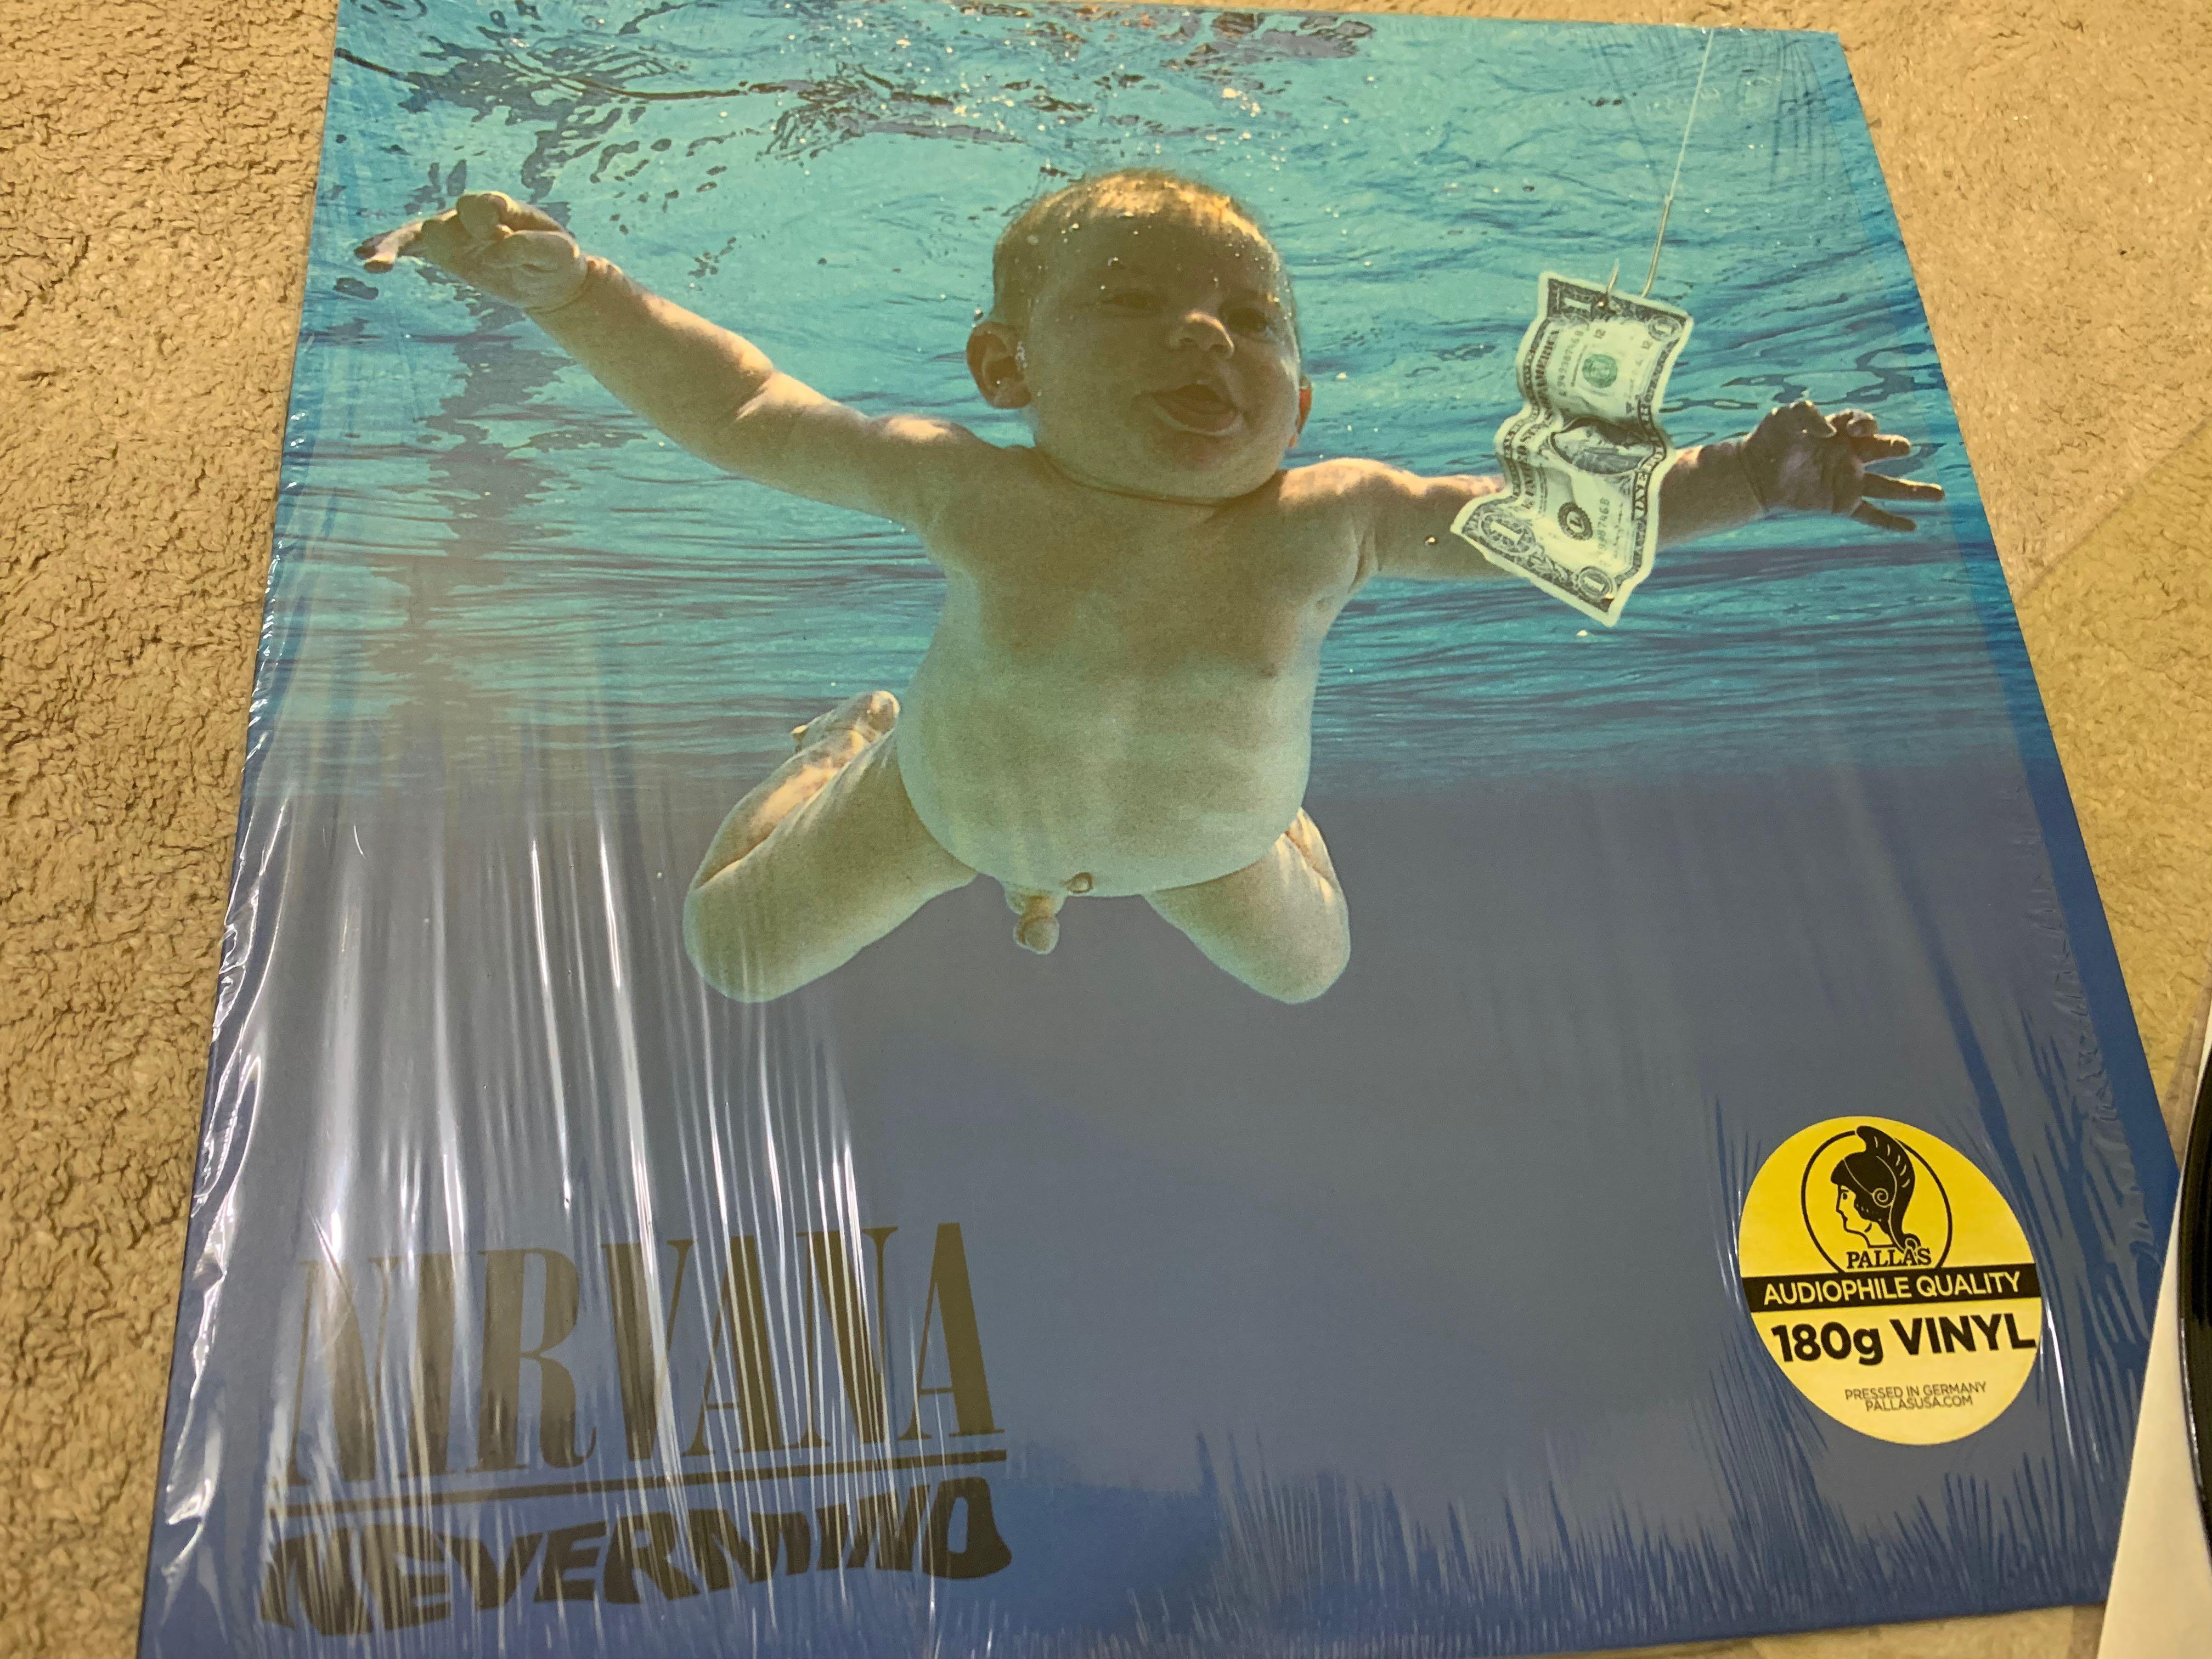 Nirvana - Nevermind (180g Pallas Pressing) Vinyl LP